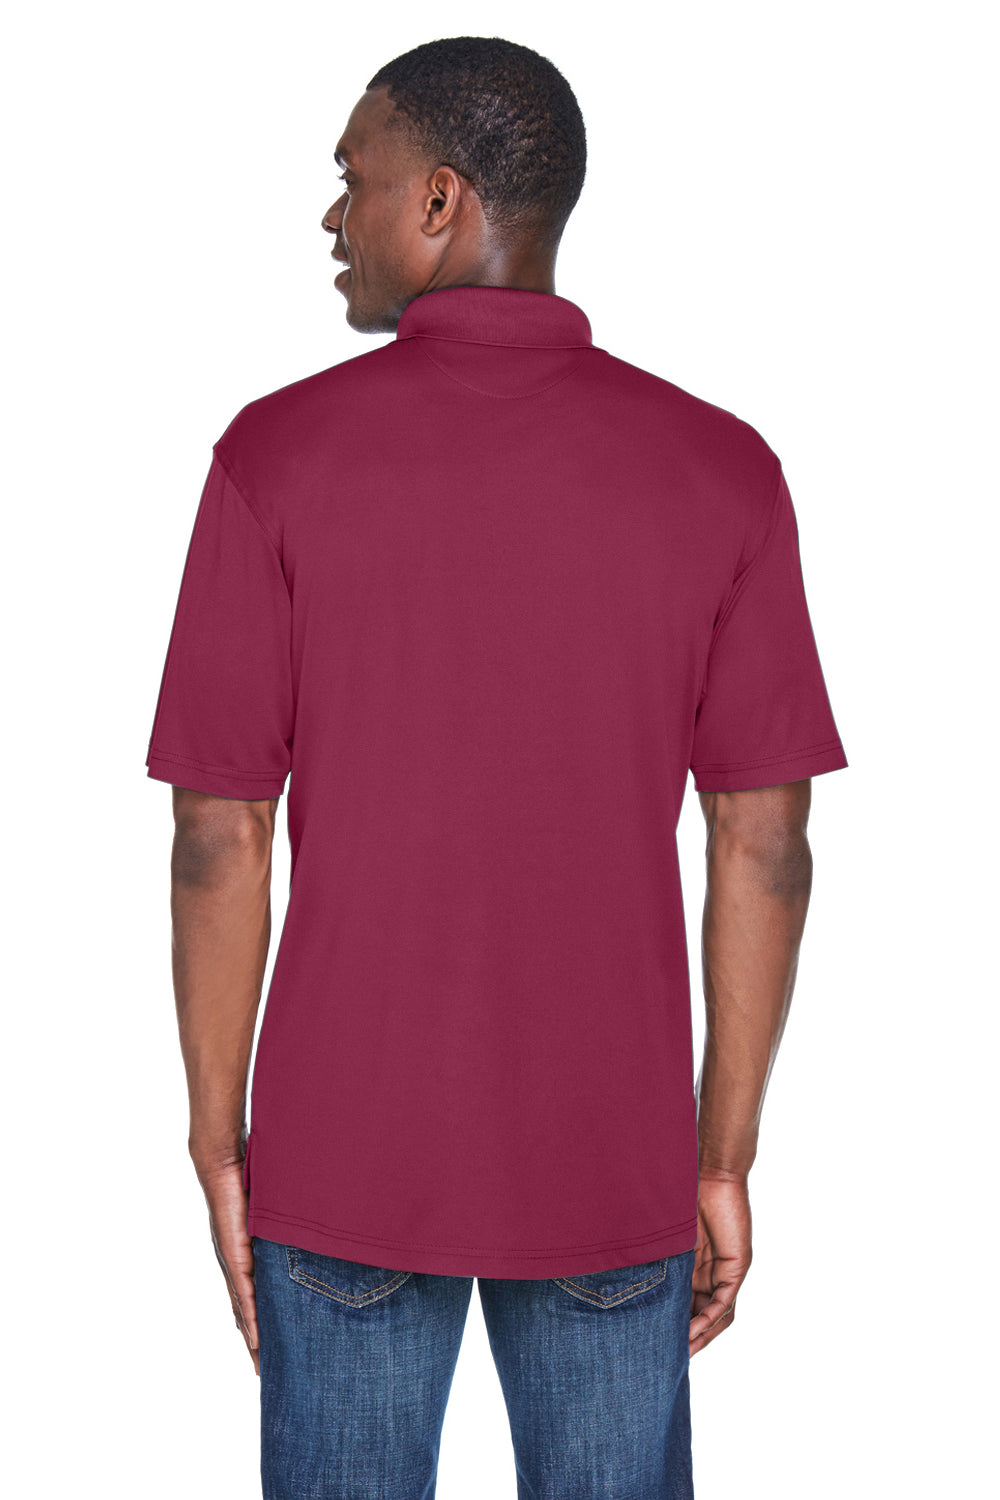 UltraClub 8425 Mens Cool & Dry Performance Moisture Wicking Short Sleeve Polo Shirt Maroon Back